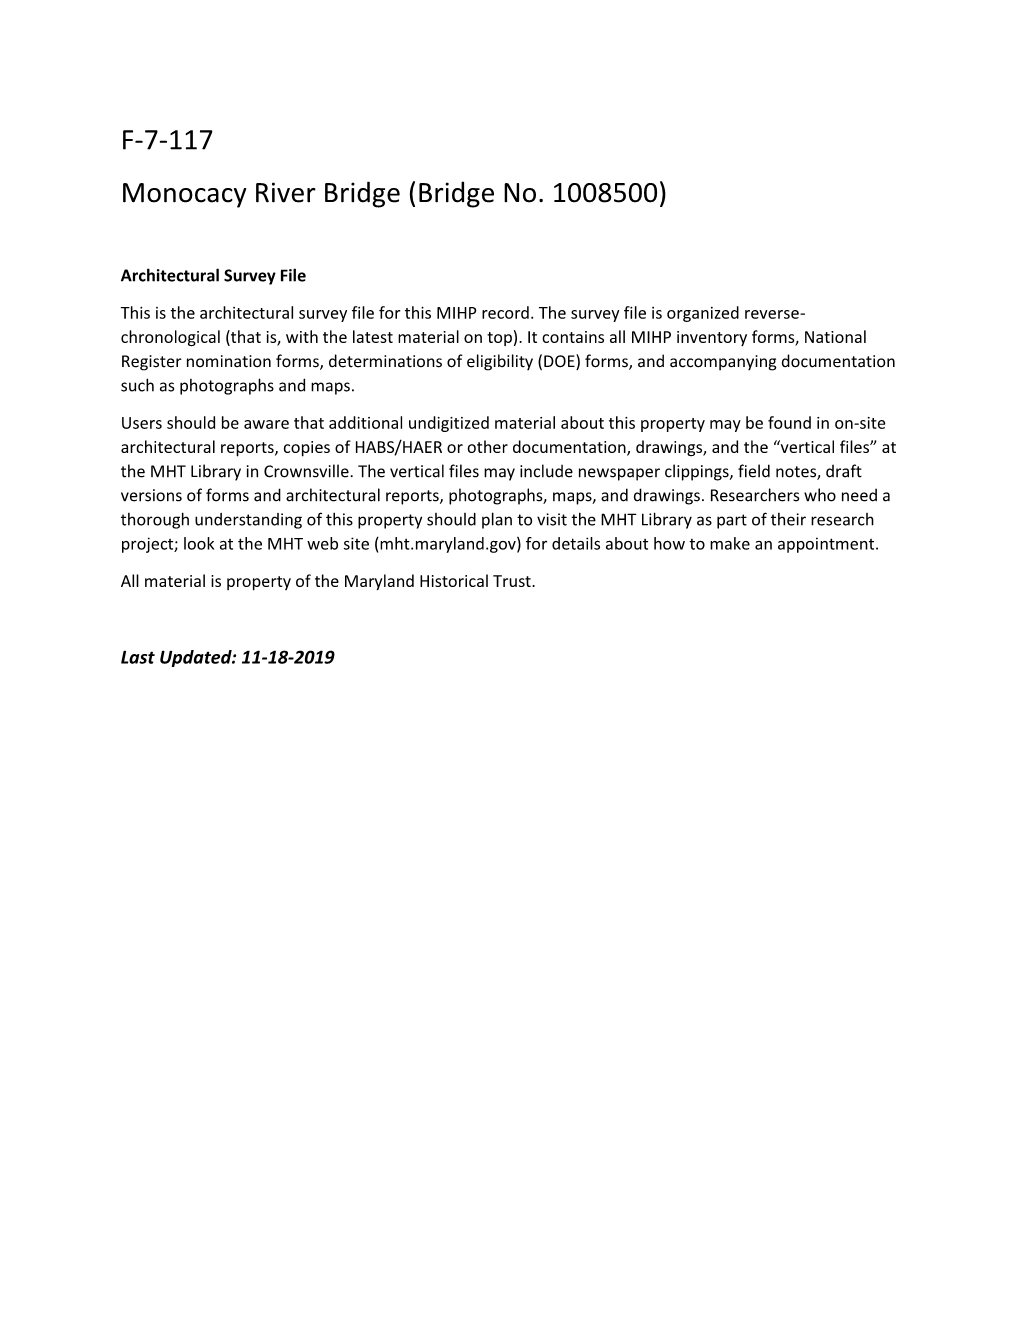 F-7-117 Monocacy River Bridge (Bridge No. 1008500)